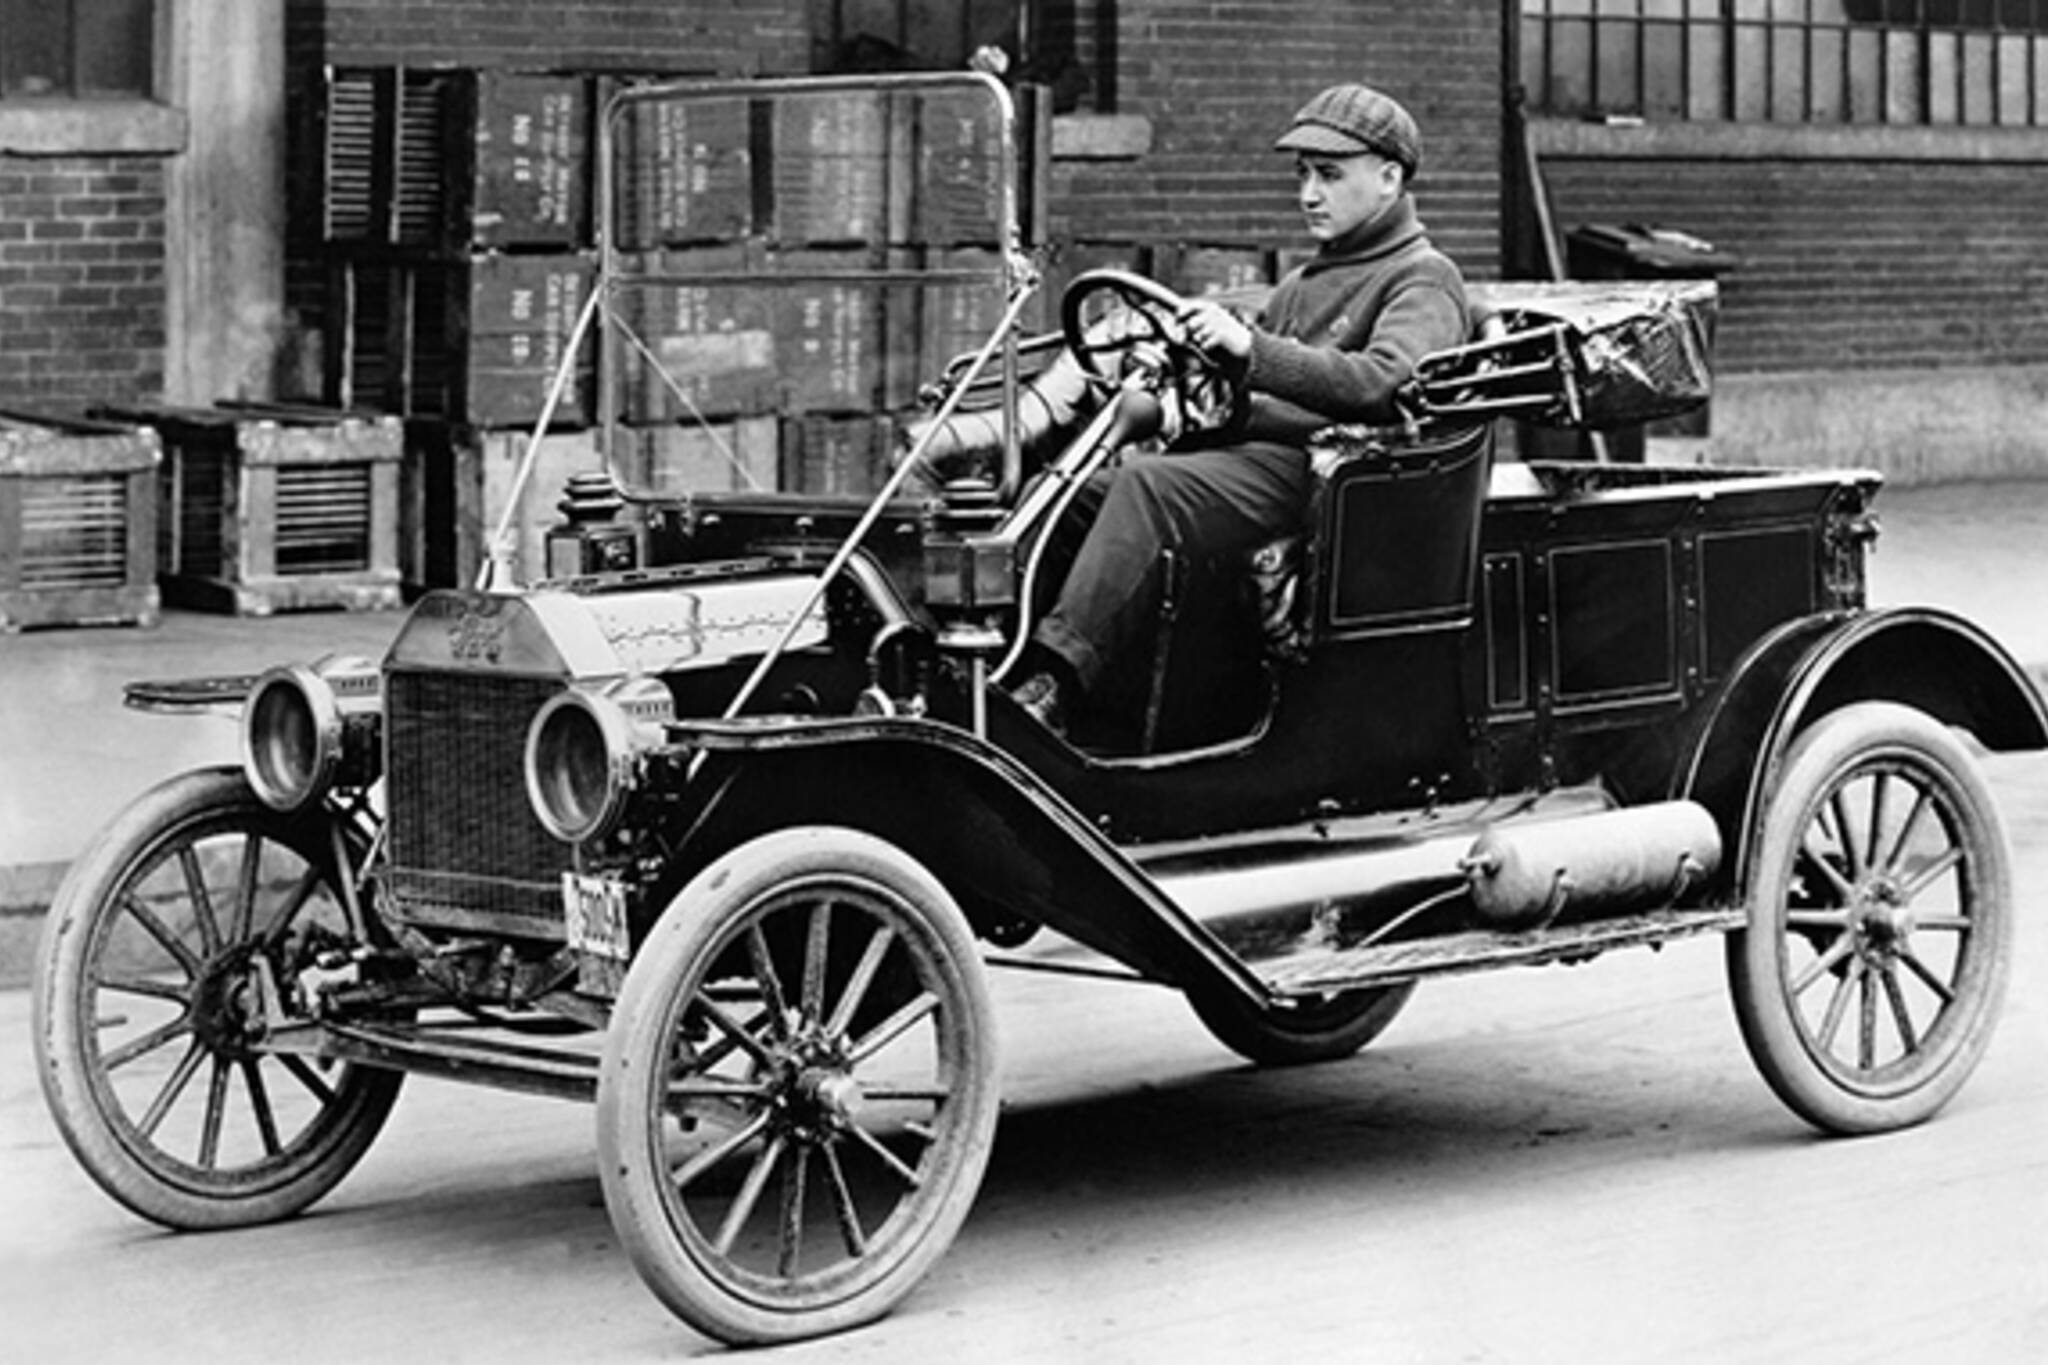 Форд первые машины. Ford model t 1927. Ford model t 1908 и 1927.